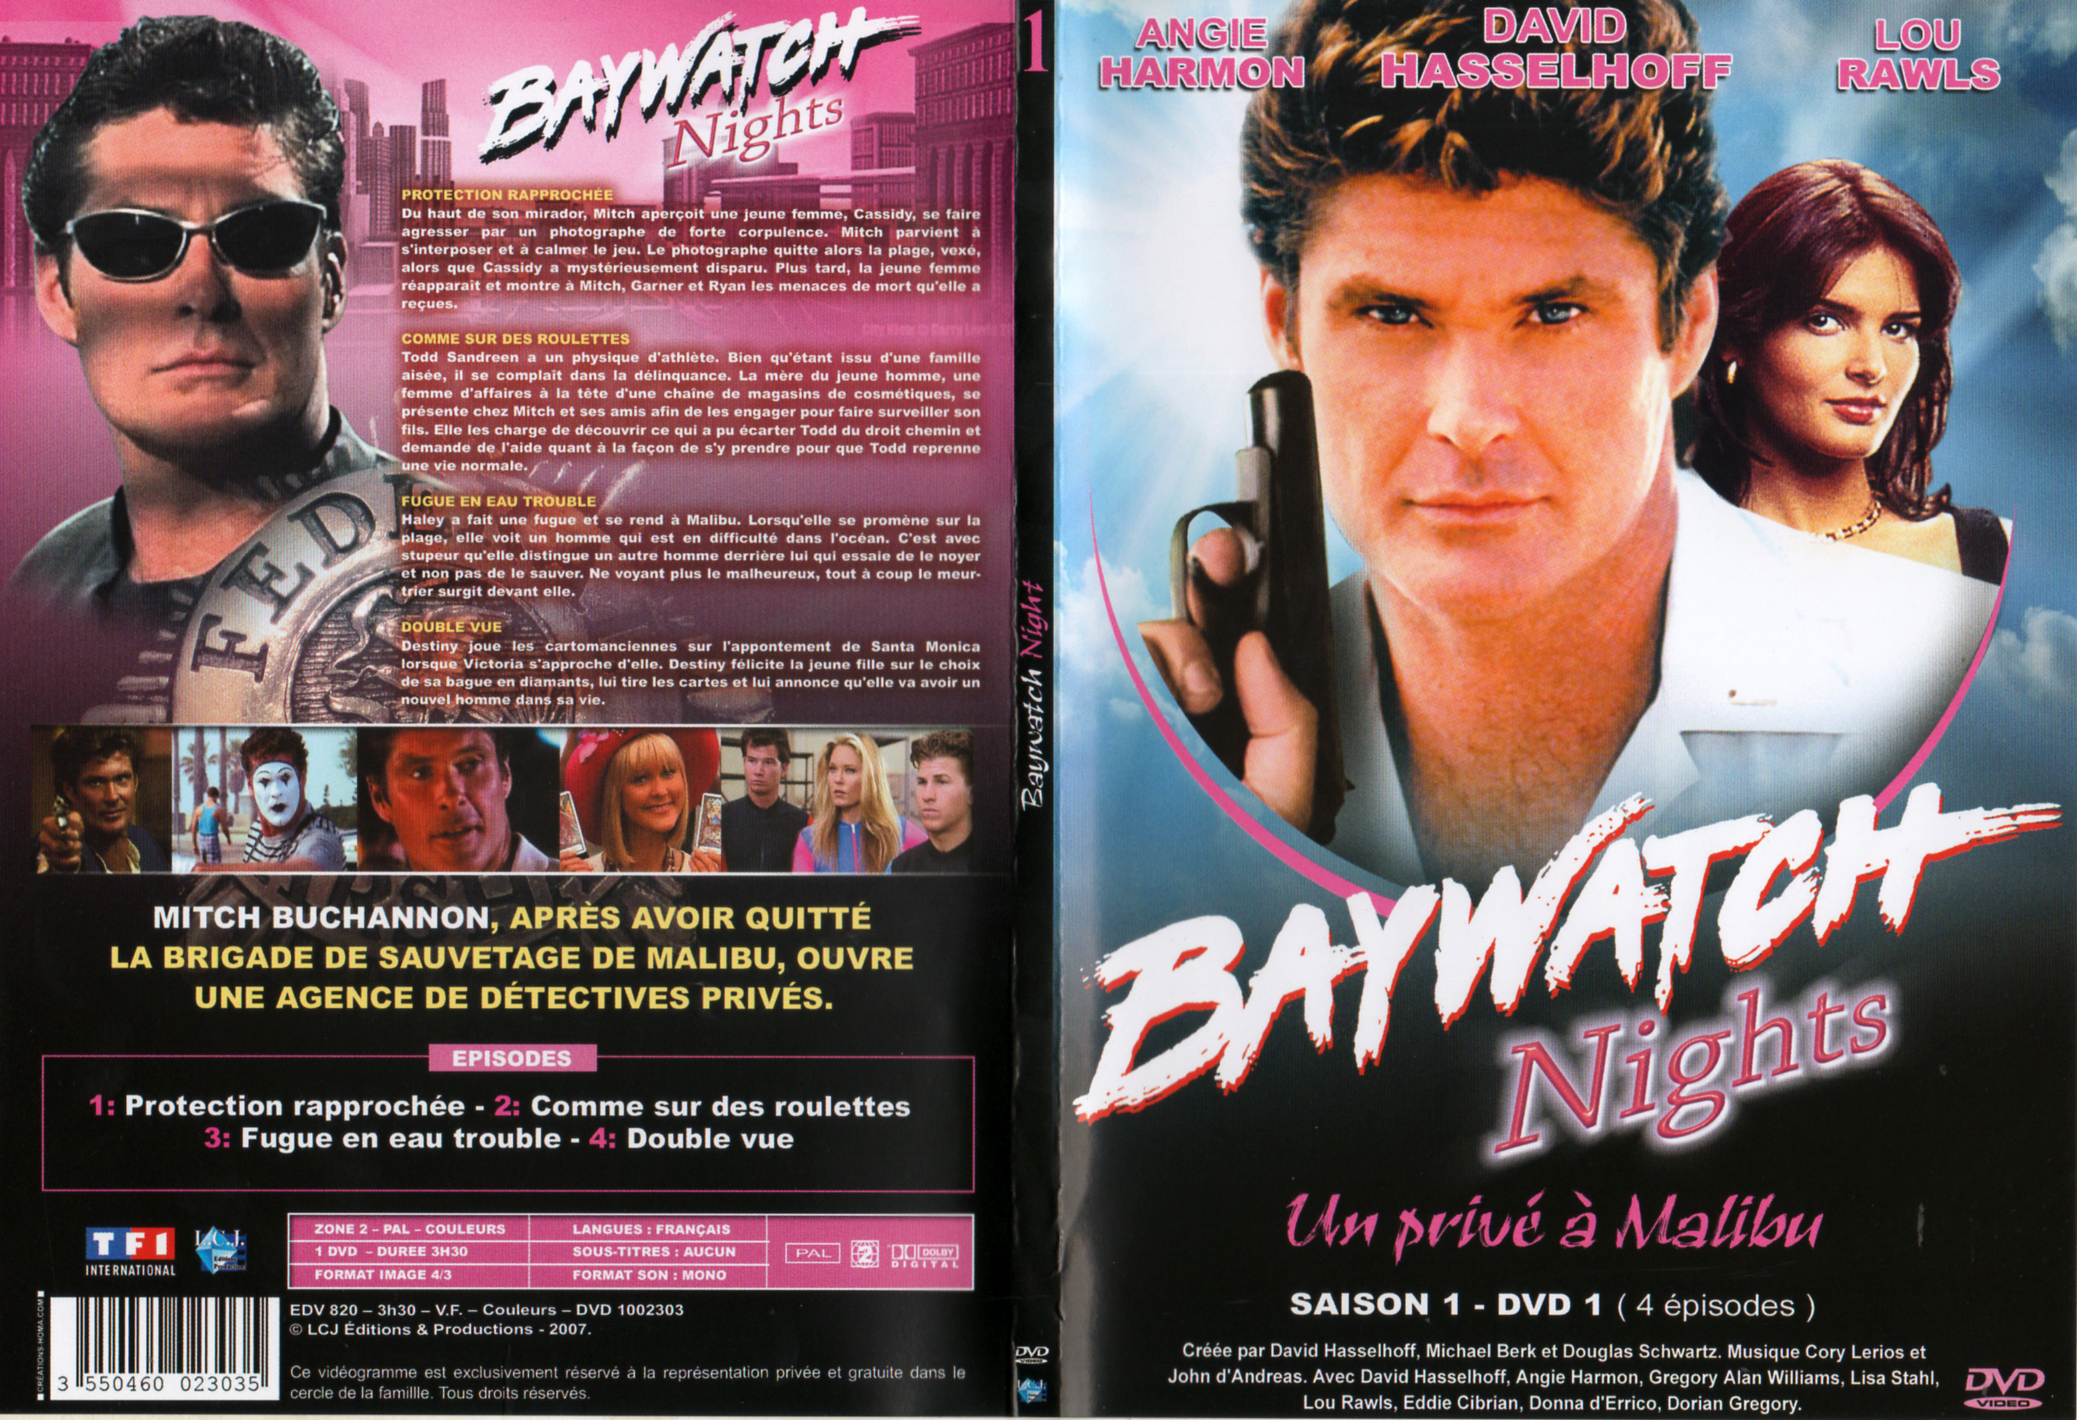 Jaquette DVD Baywatch nights Saison 1 DISC 1